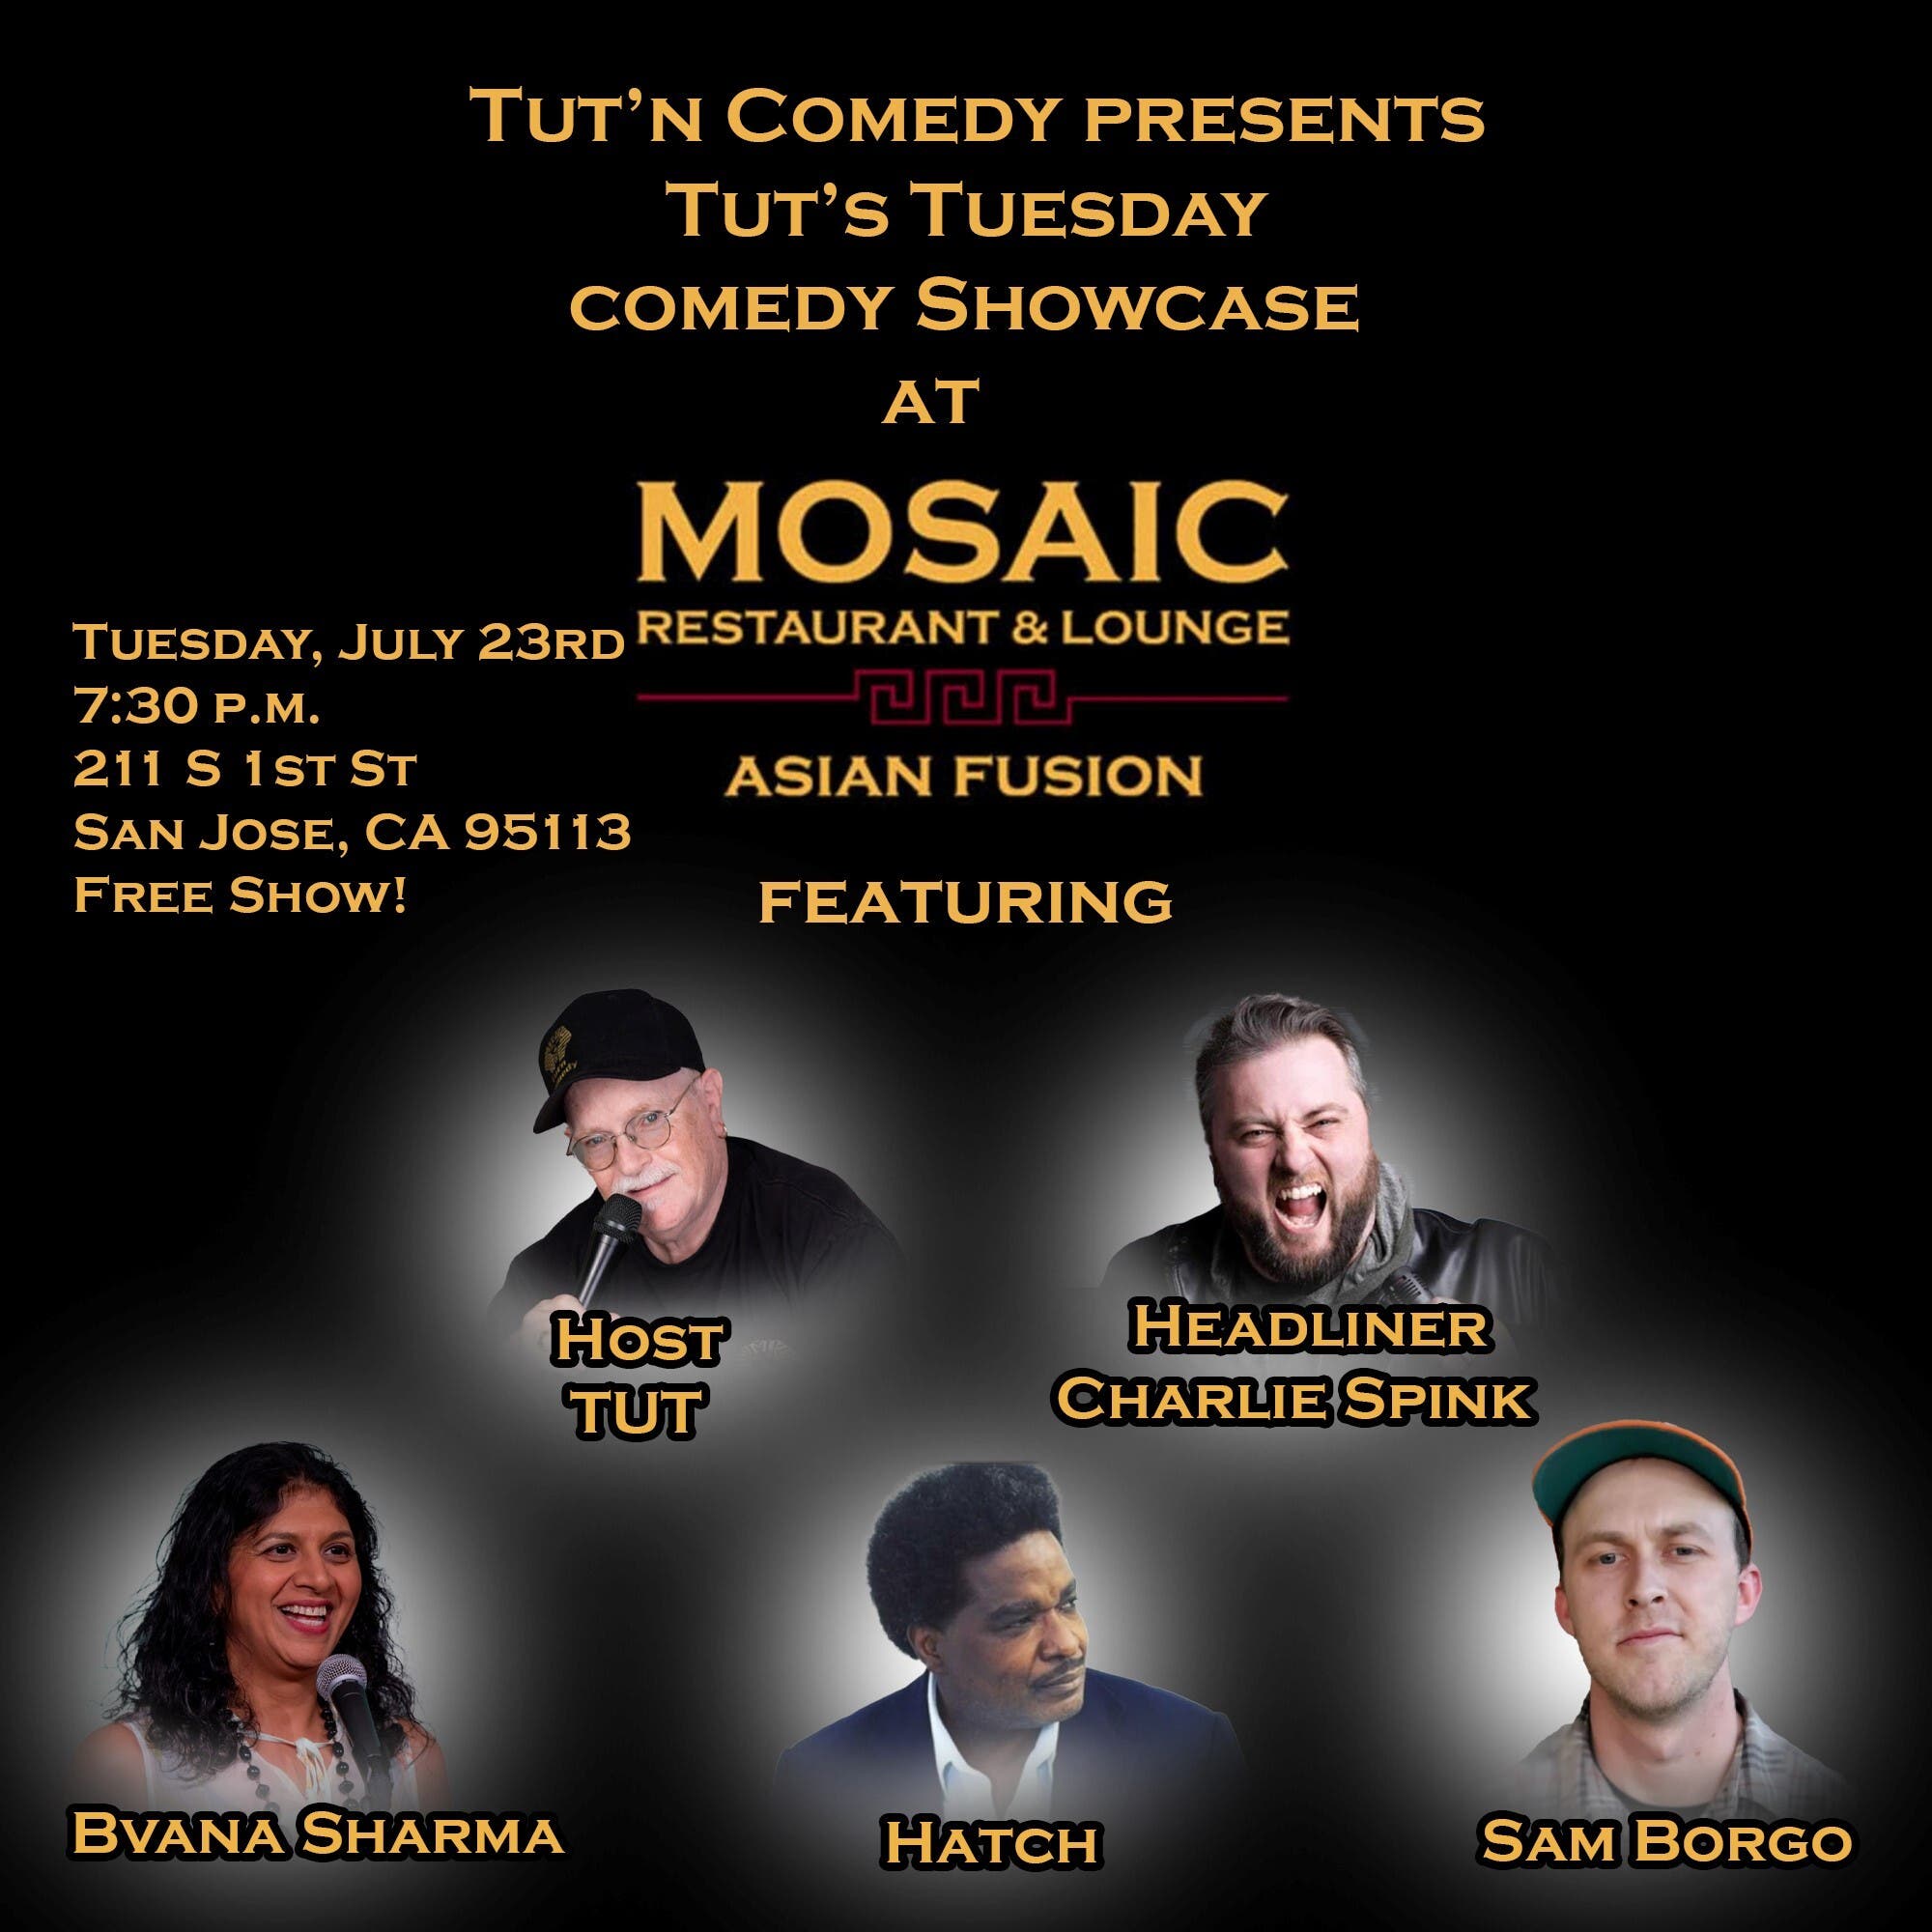 Tut's Tuesday Comedy Showcase